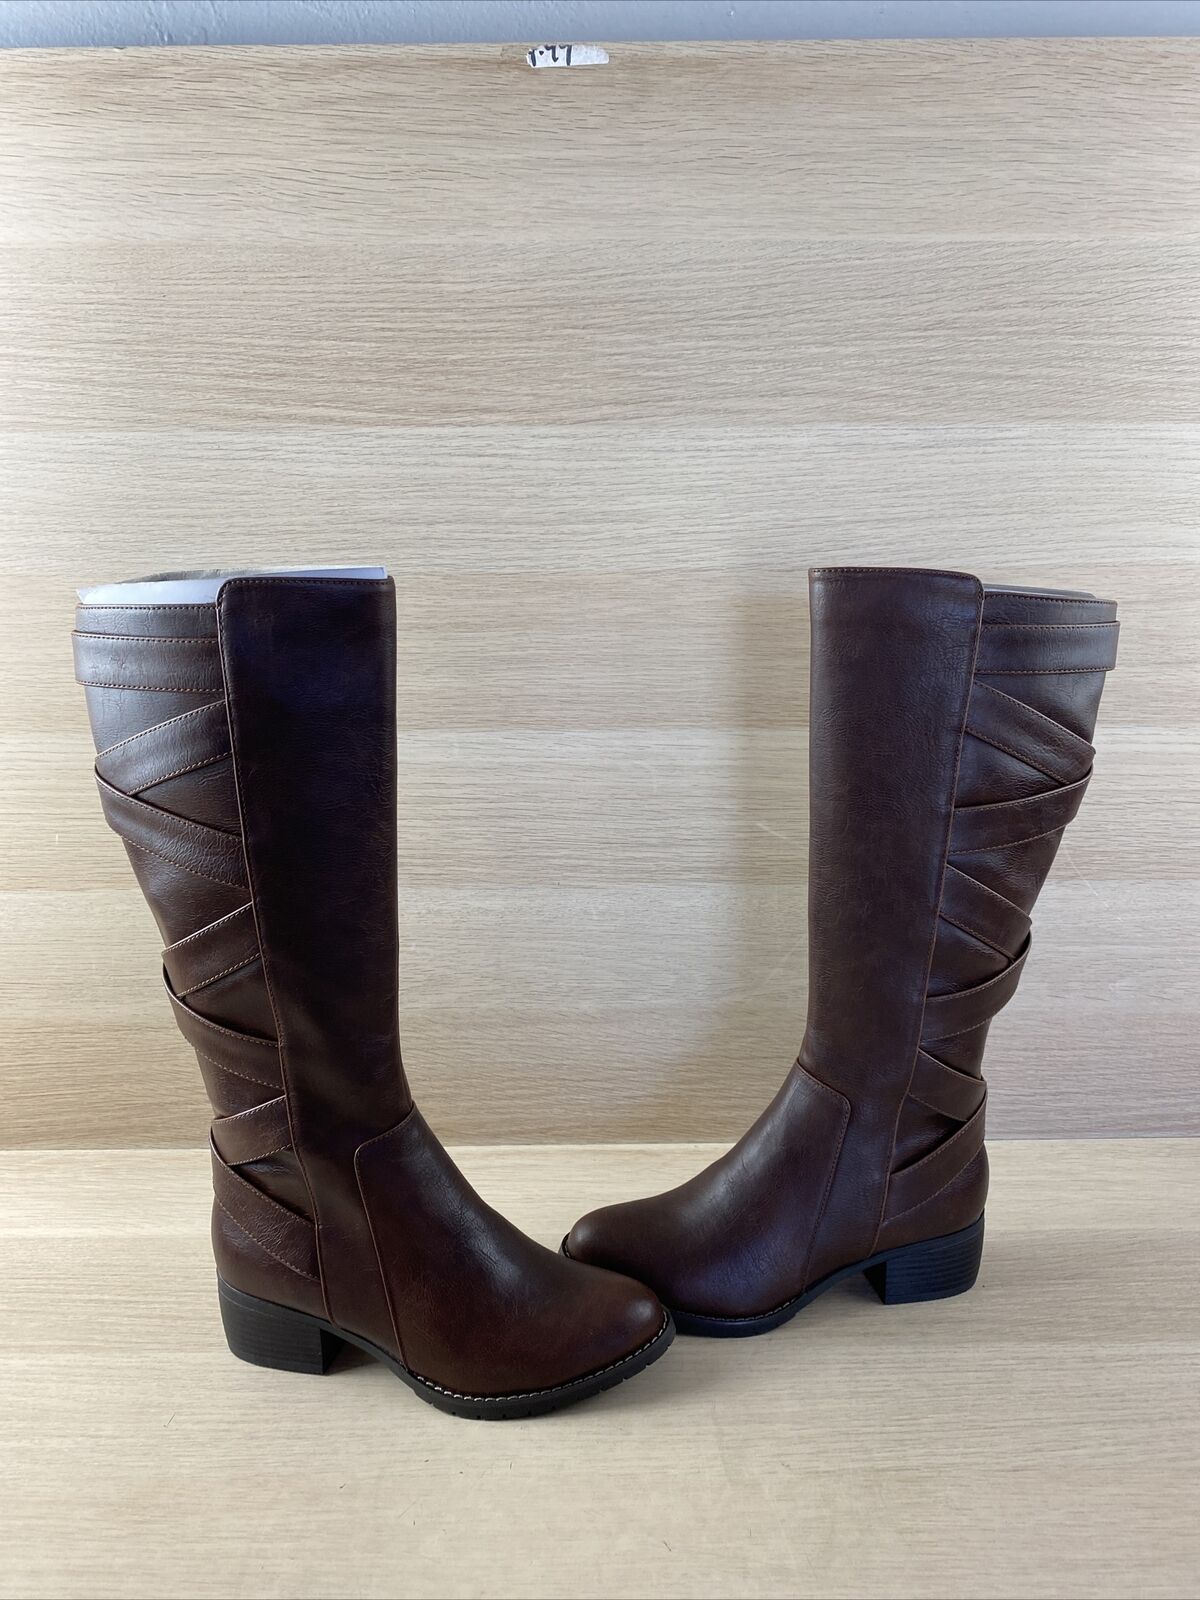 NWB EuroSoft MAYNARD Brown Leather Side Zip Block Heel Knee High Boots Women 7 M